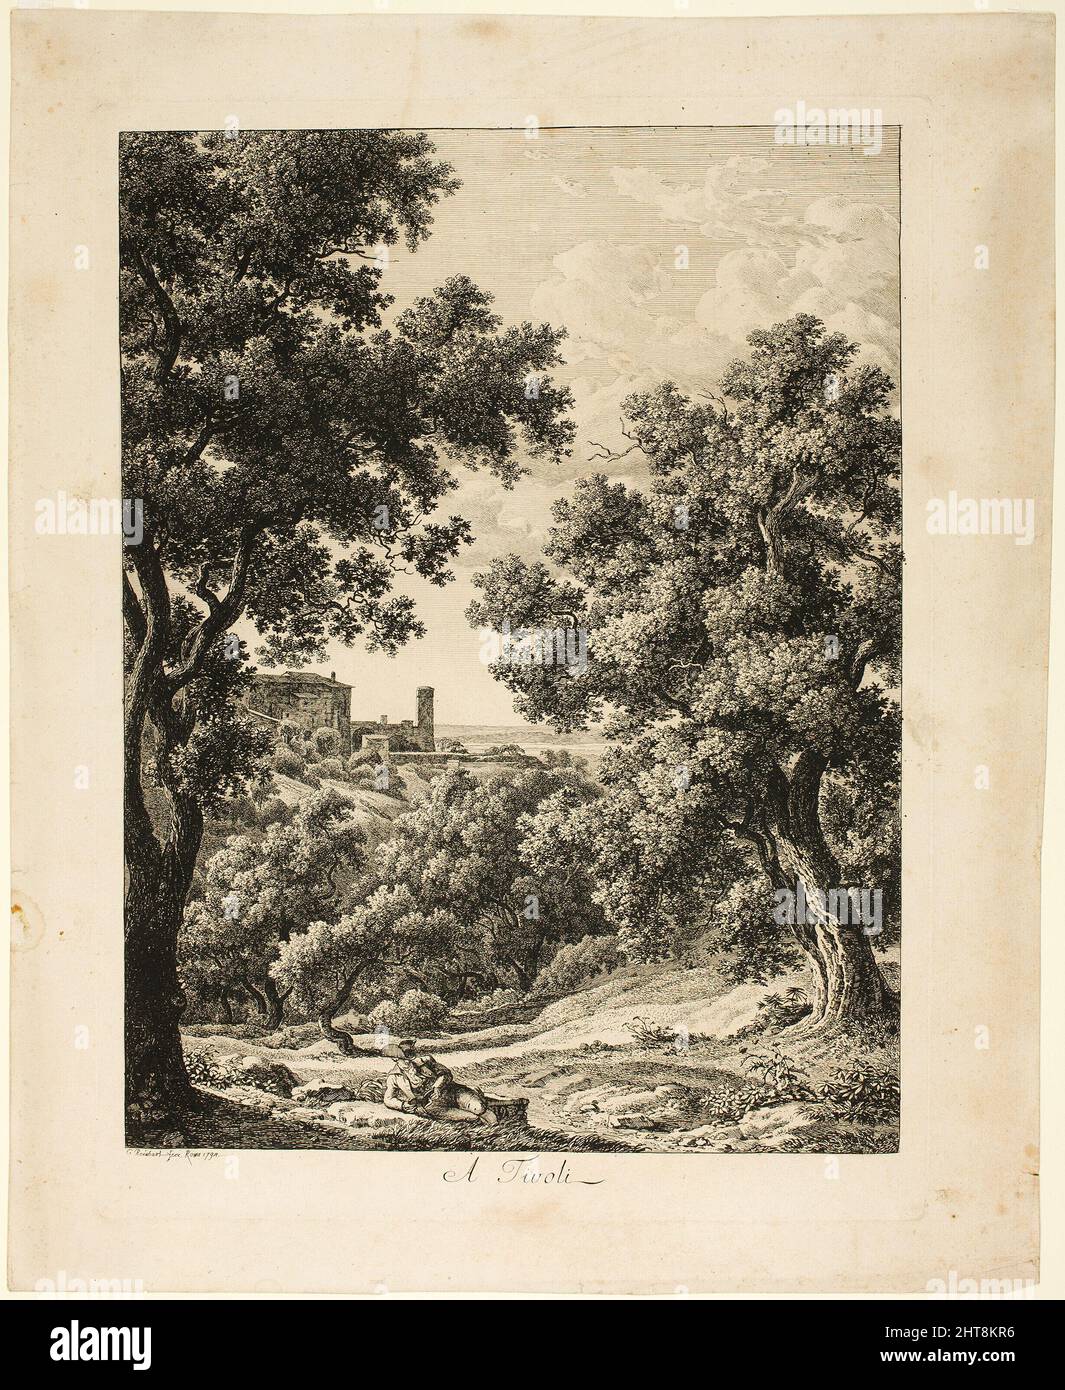 A Tivoli, from Malerisch Radierte Prospekte aus Italien, 1794. Stock Photo